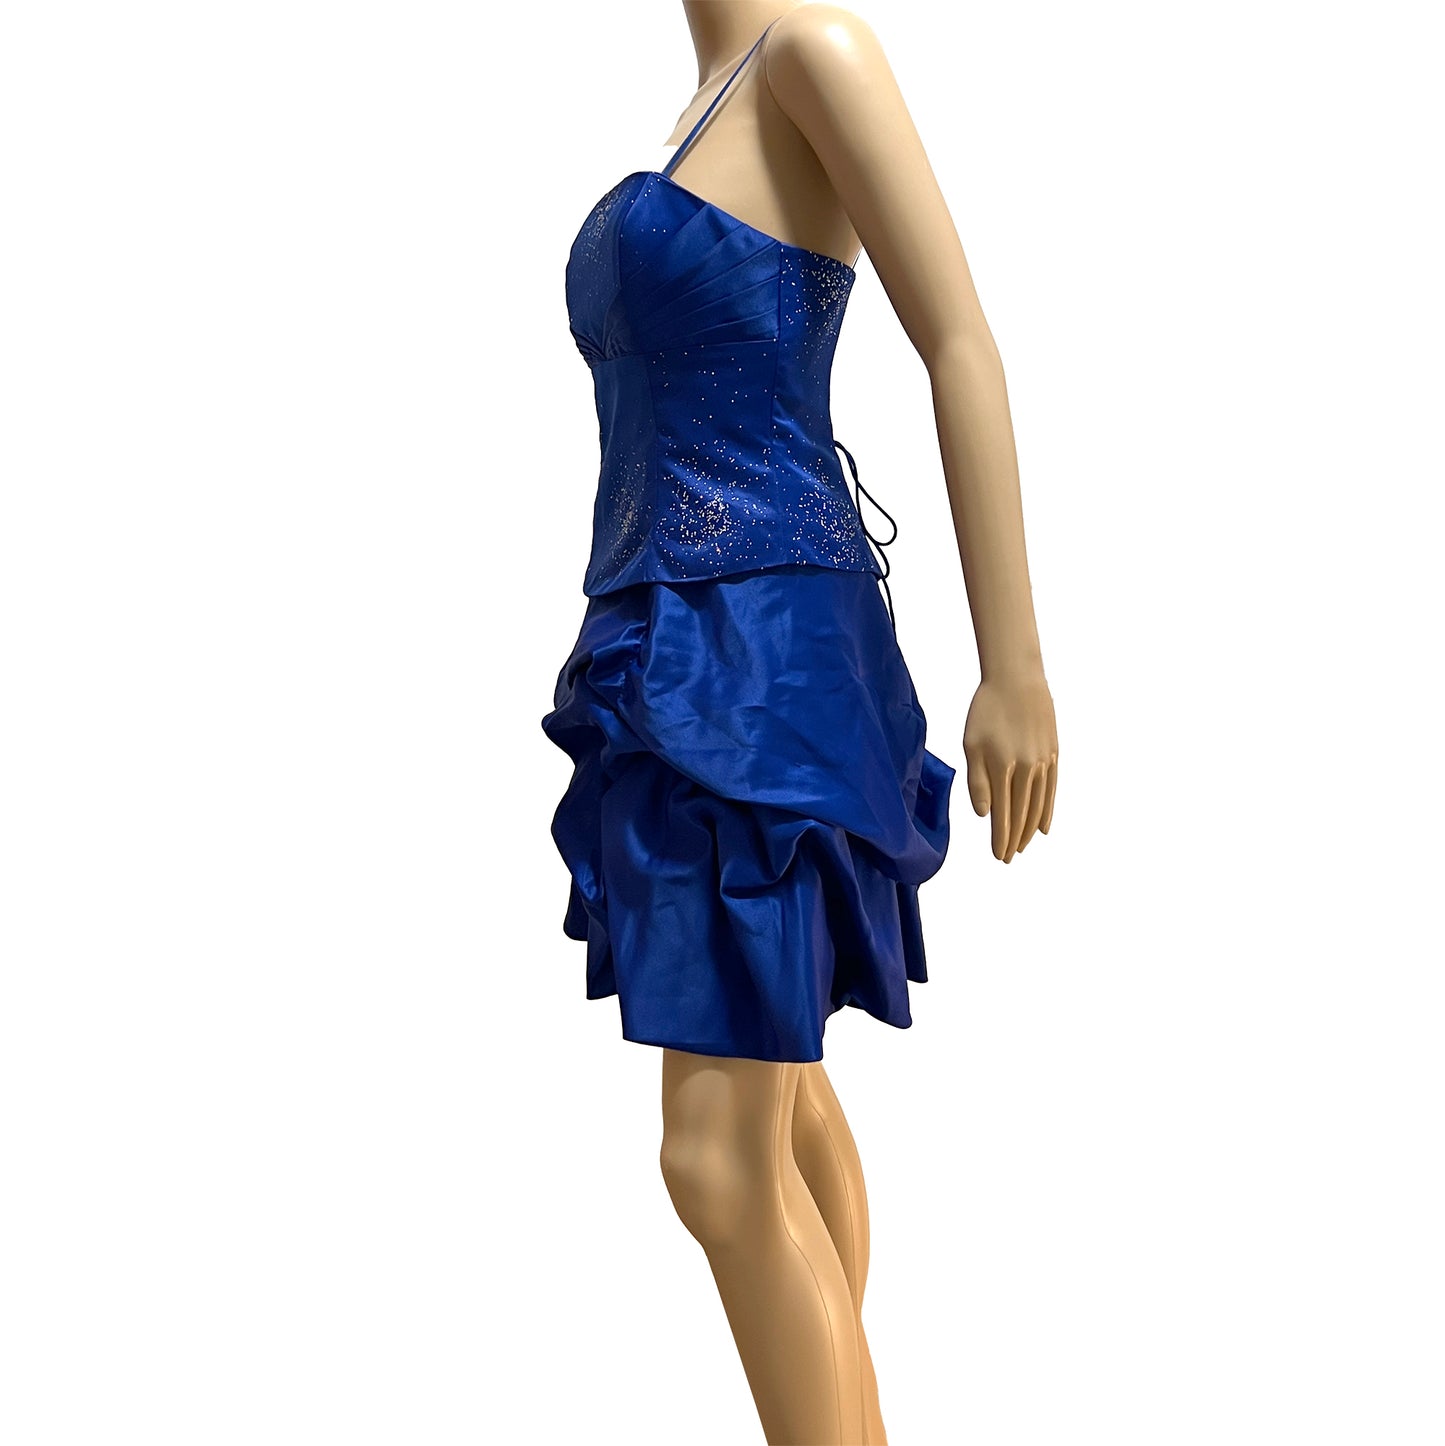 Adrianna-Papell-Hailey-Logan-Party-Dress_side-view-2.-www.eBargainsAndDeals.com